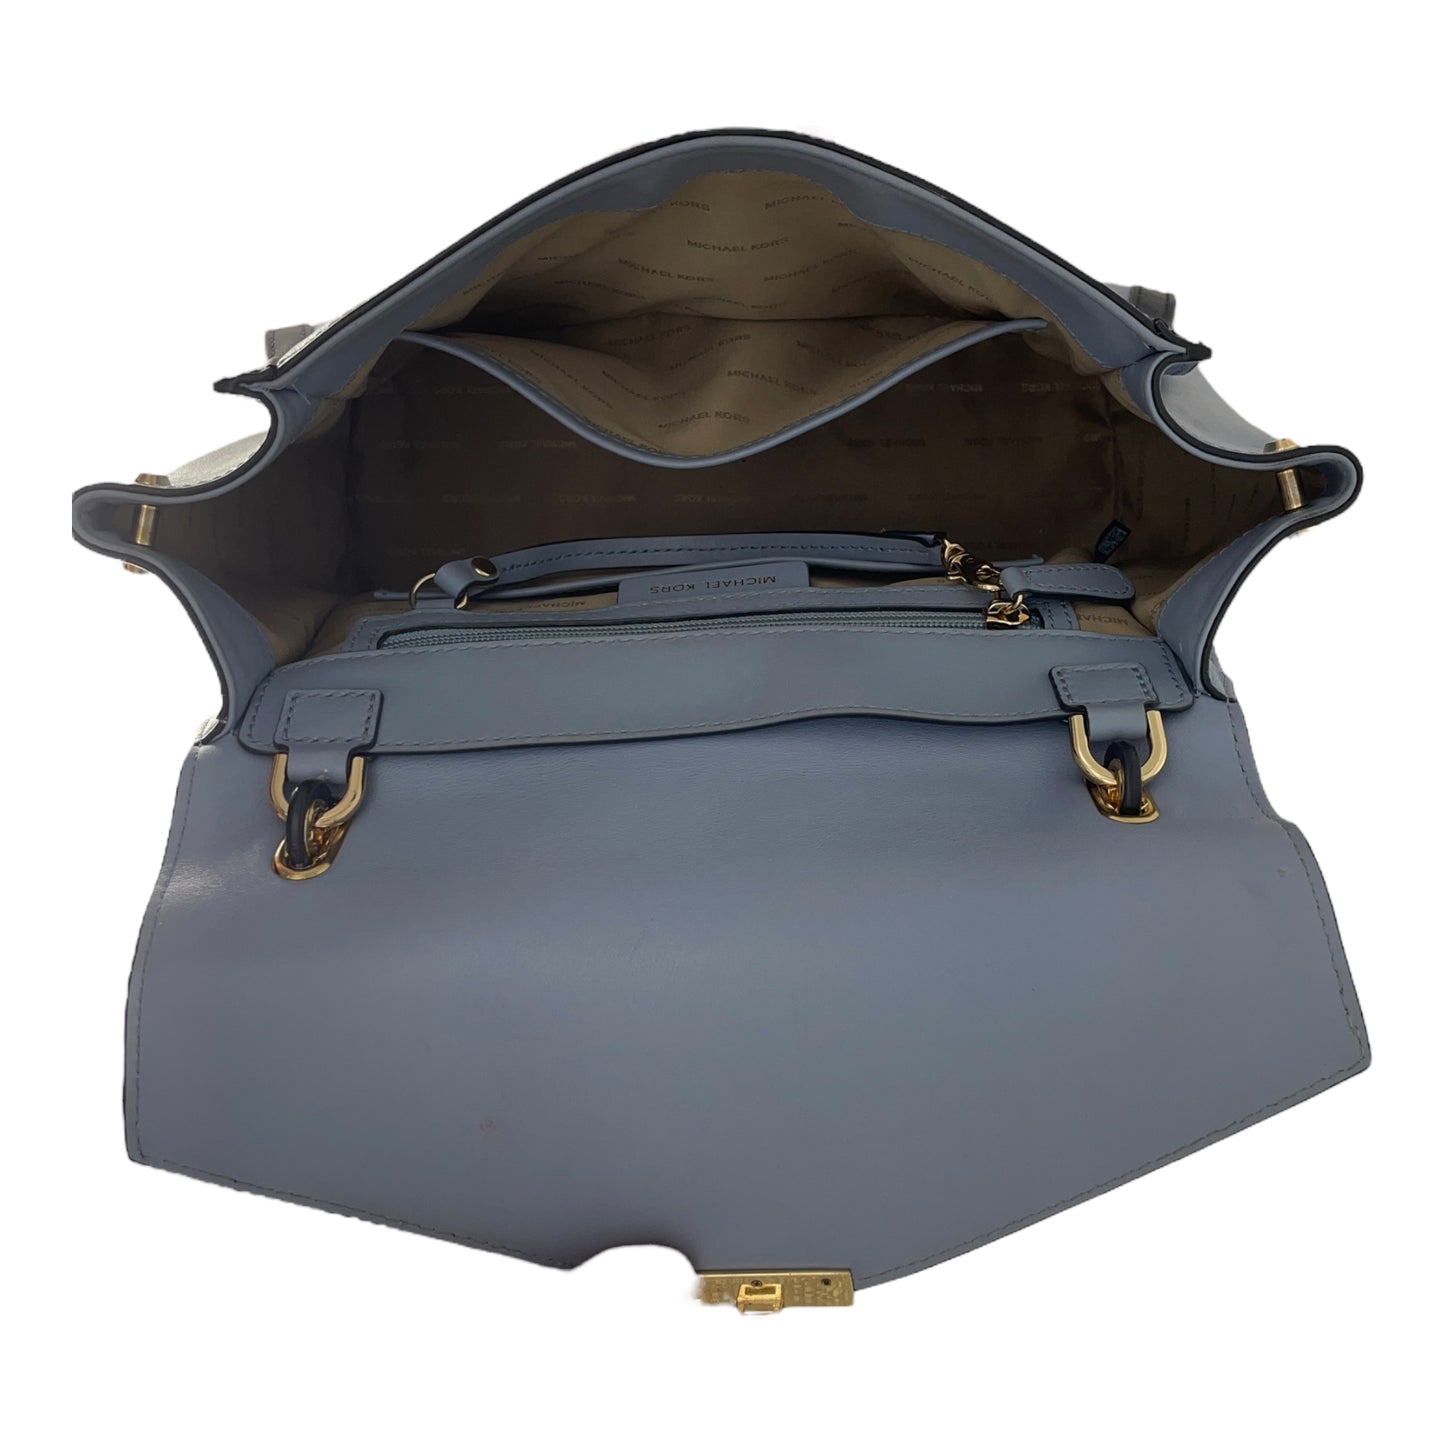 Michael Kors Whitney Large Leather Pale Blue Satchel Bag